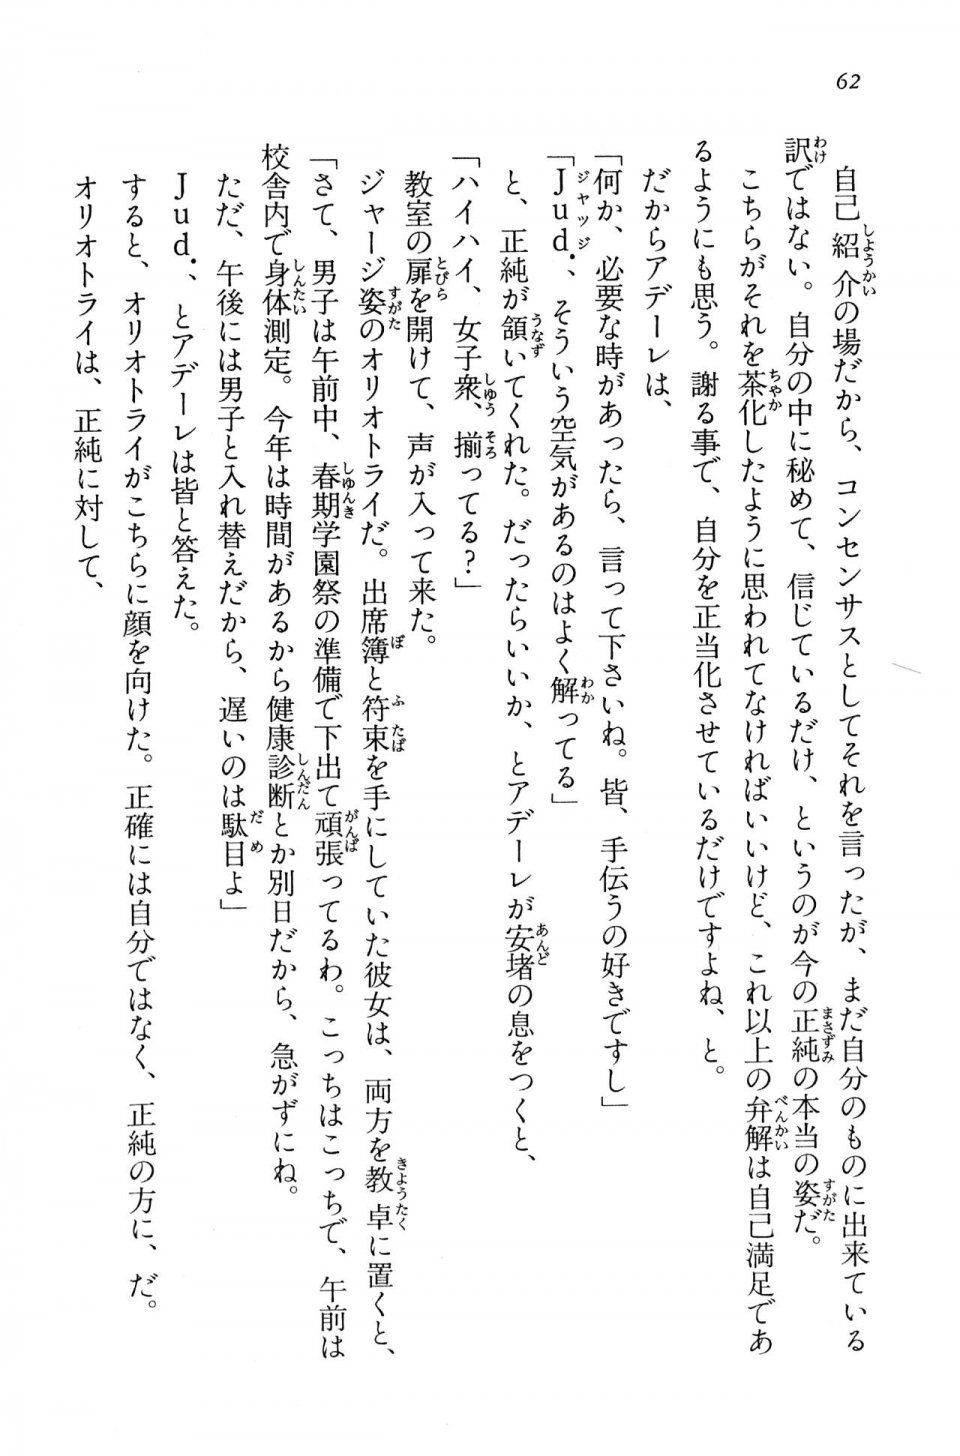 Kyoukai Senjou no Horizon BD Special Mininovel Vol 5(3A) - Photo #66